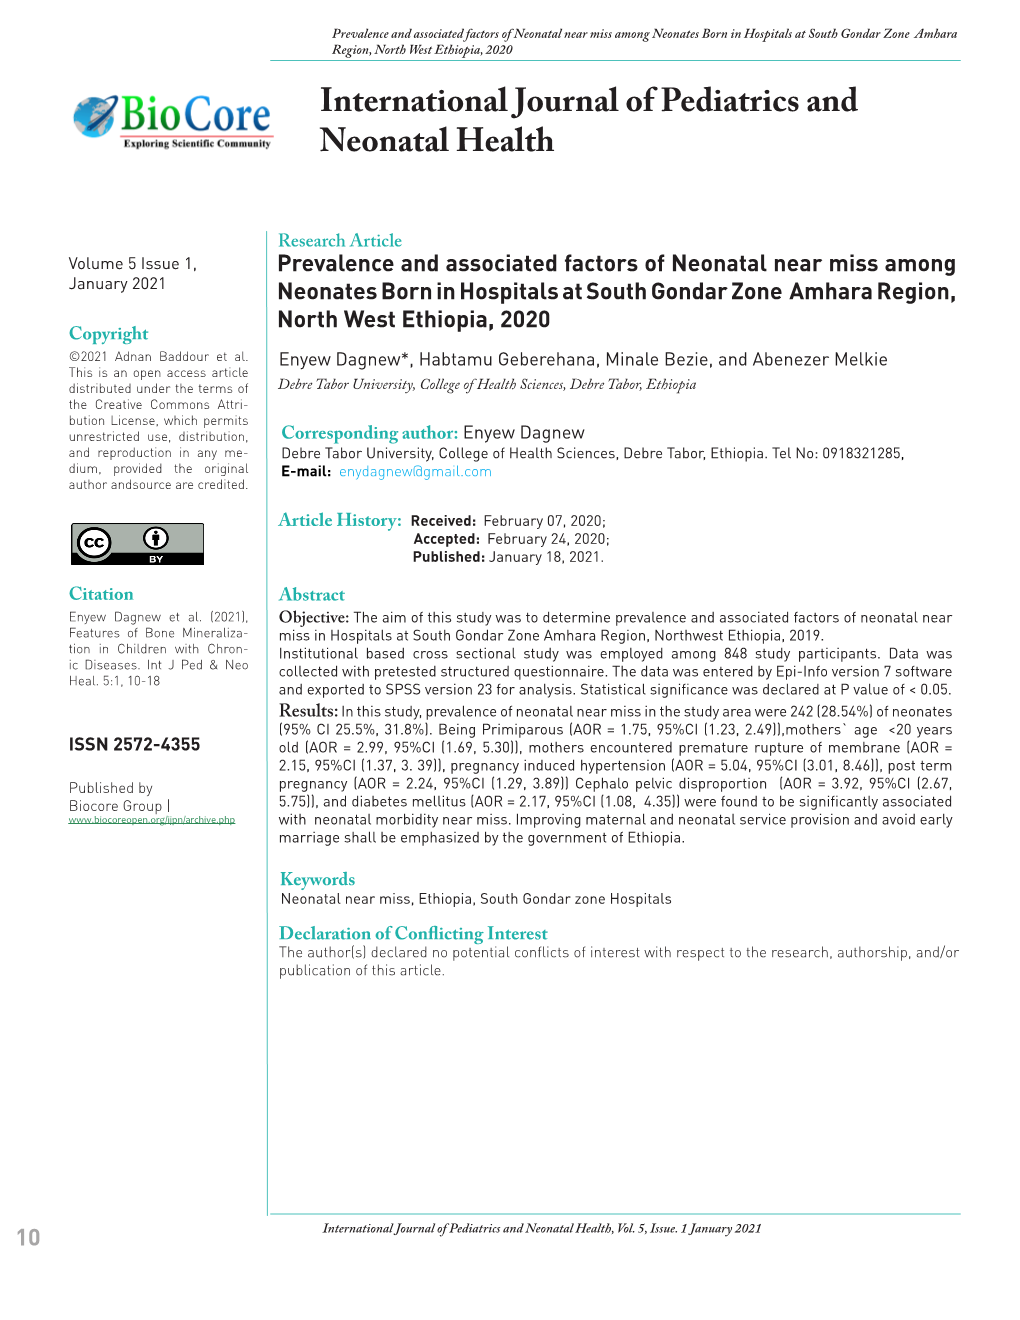 International Journal of Pediatrics and Neonatal Health